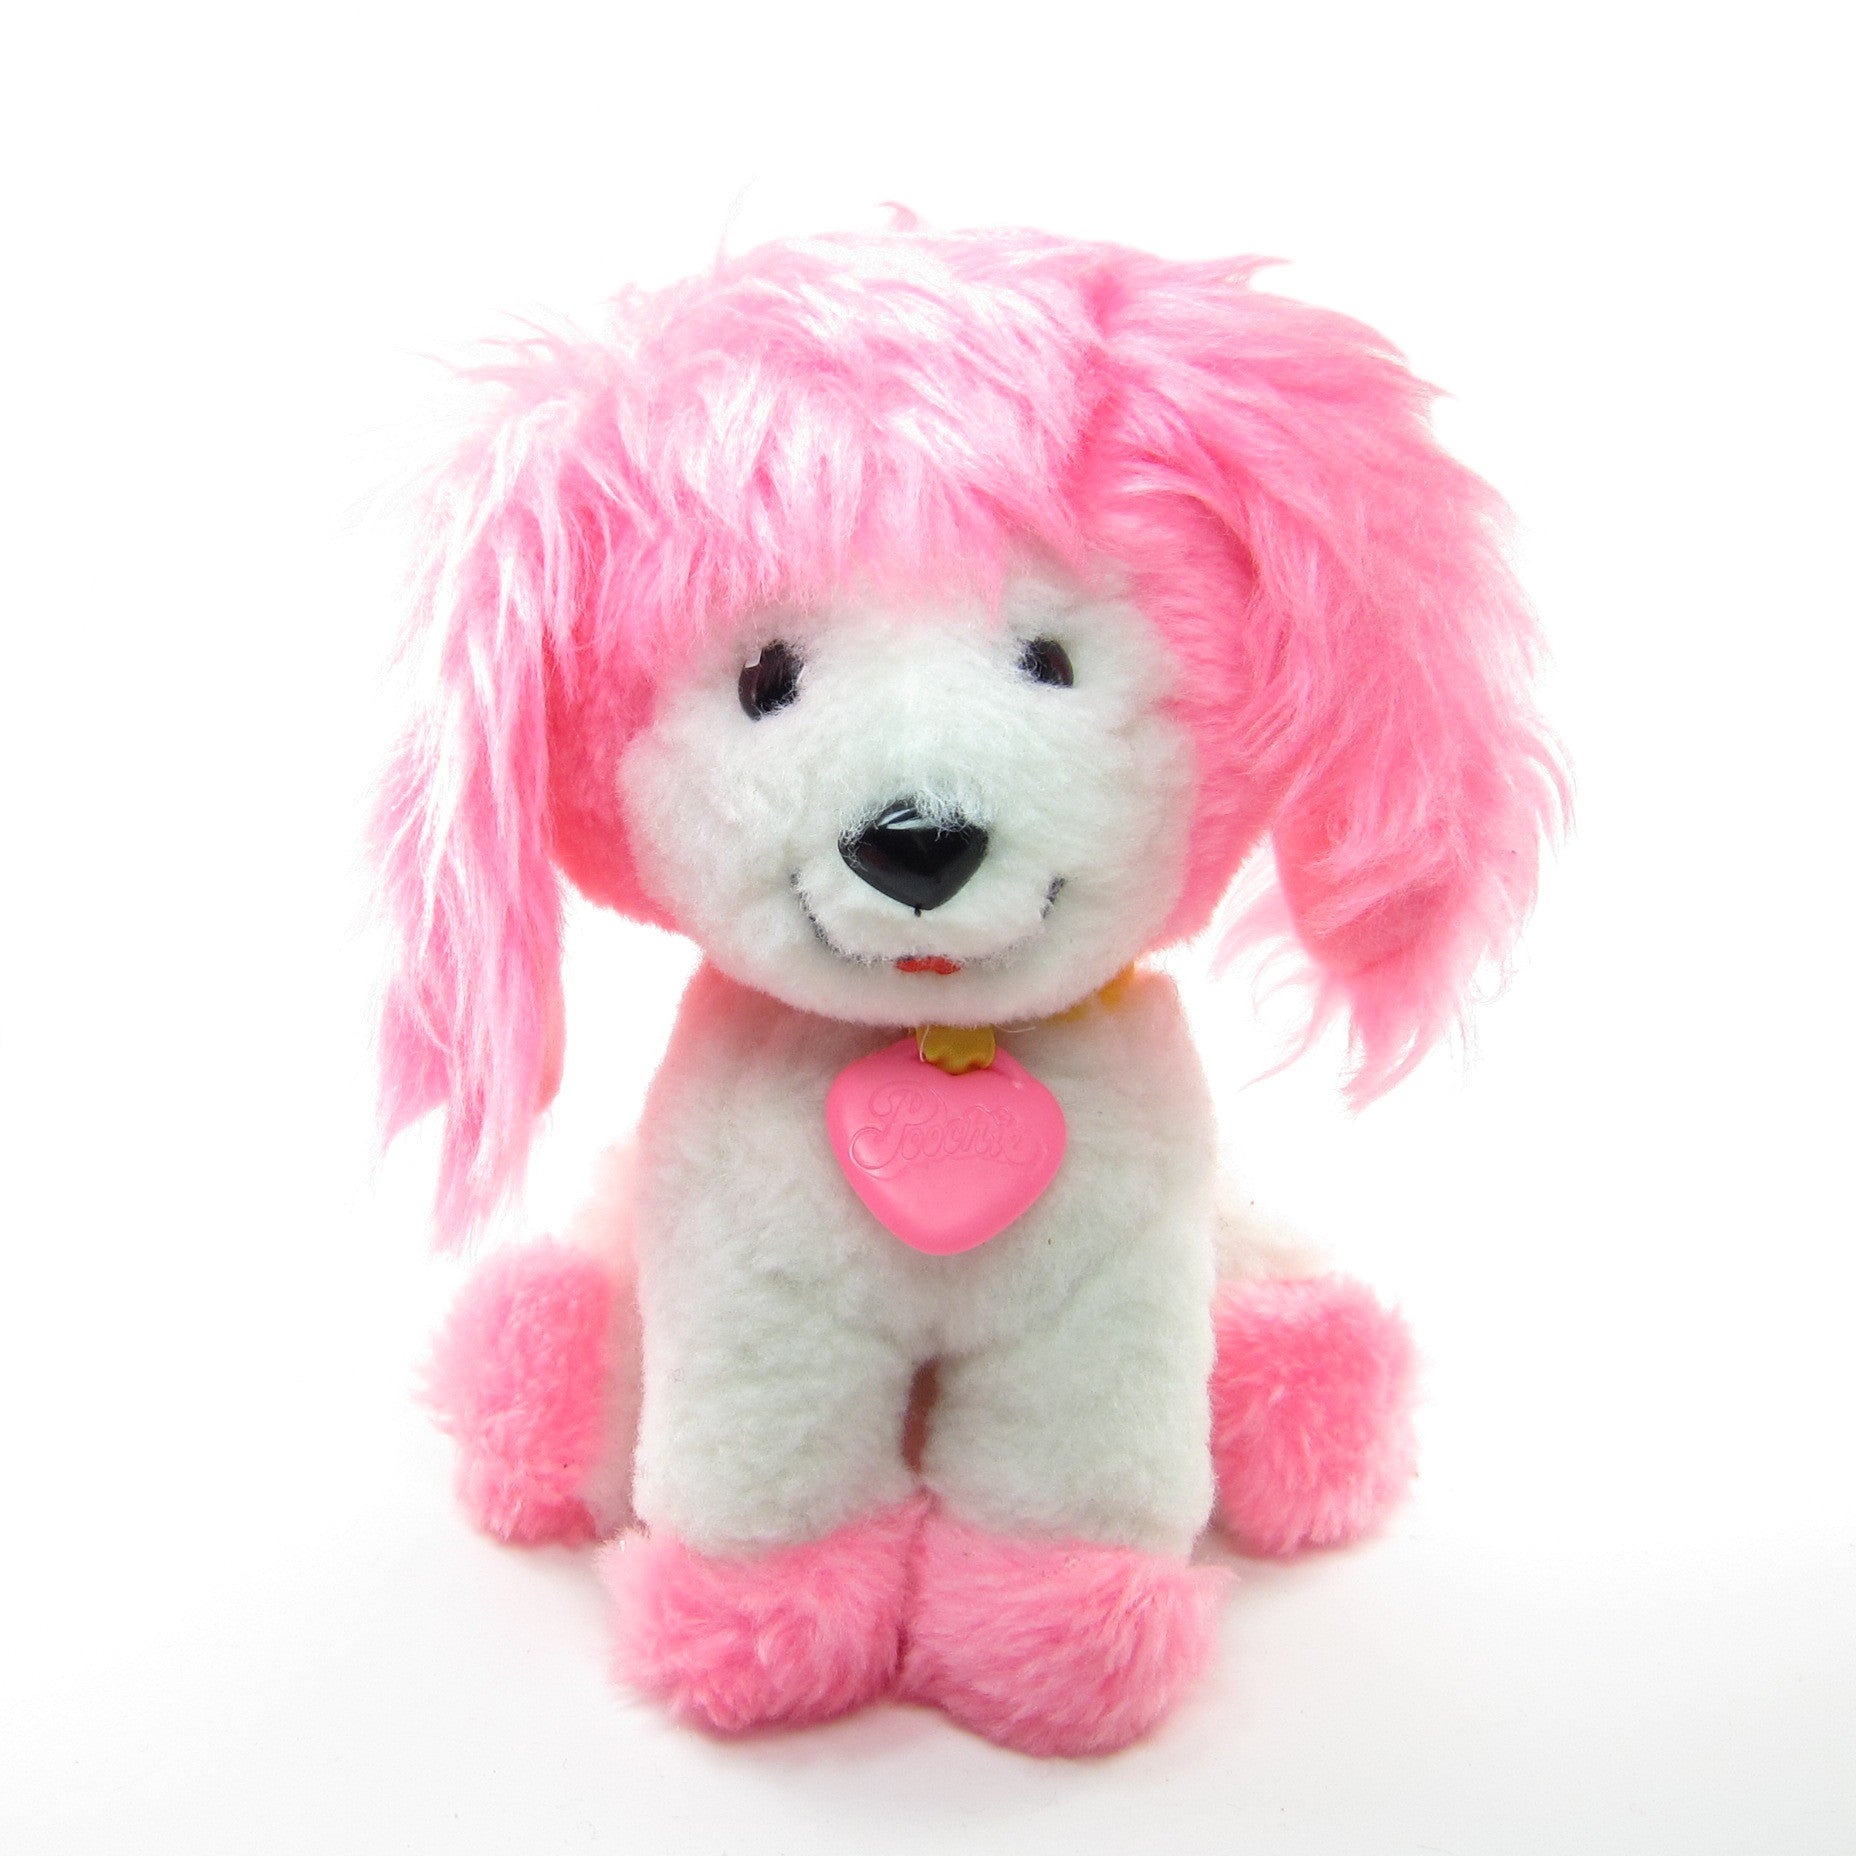 Poochie plush toy small stuffed animal dog